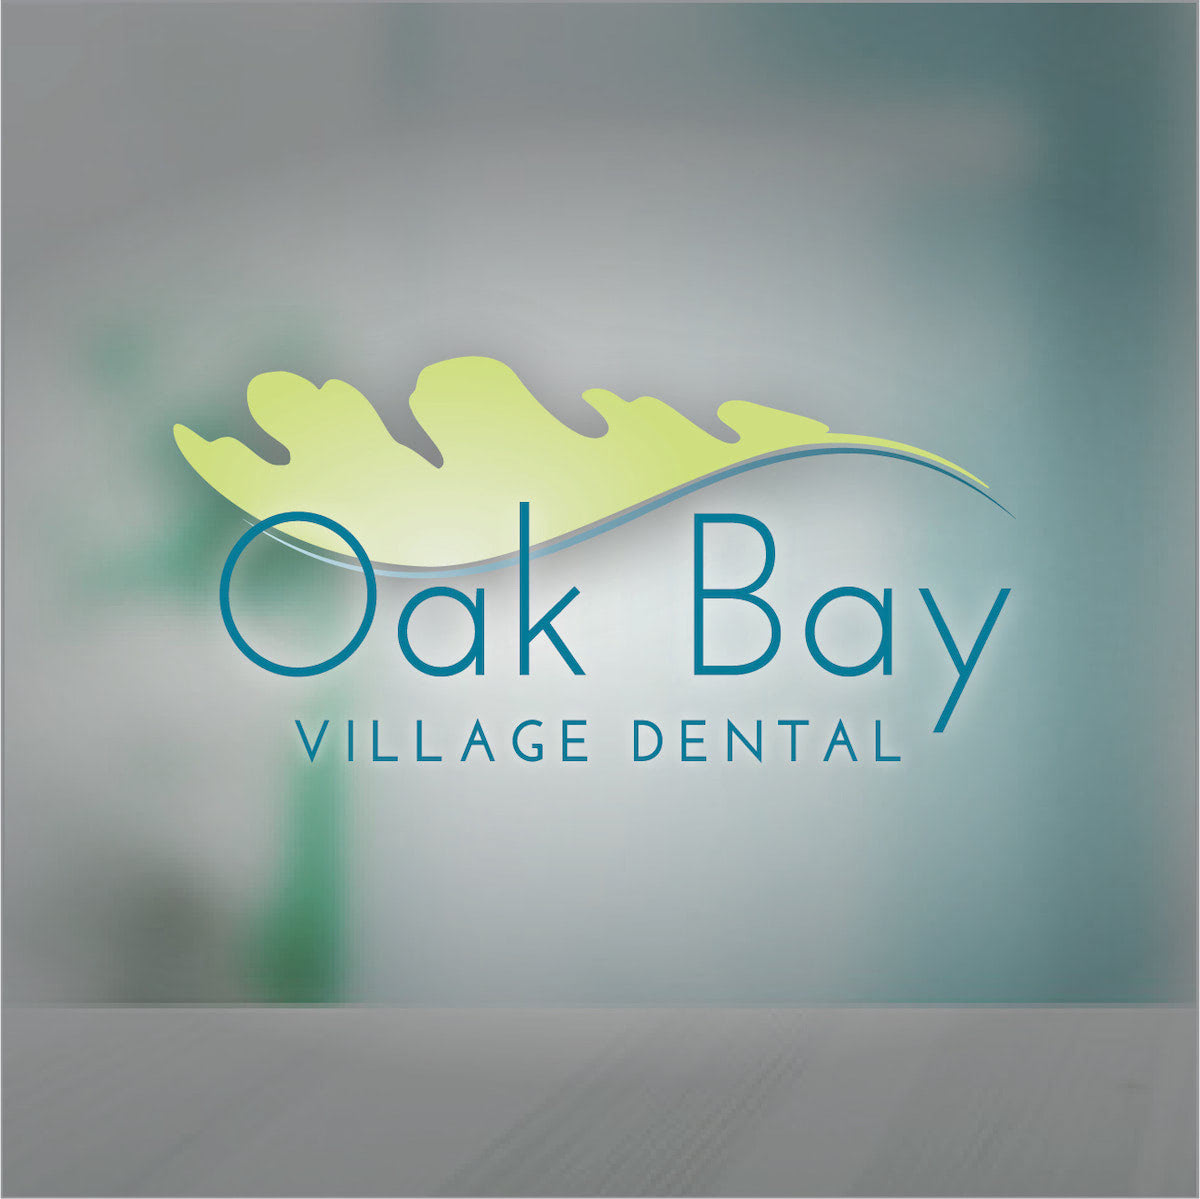 Oak Bay Village Dental